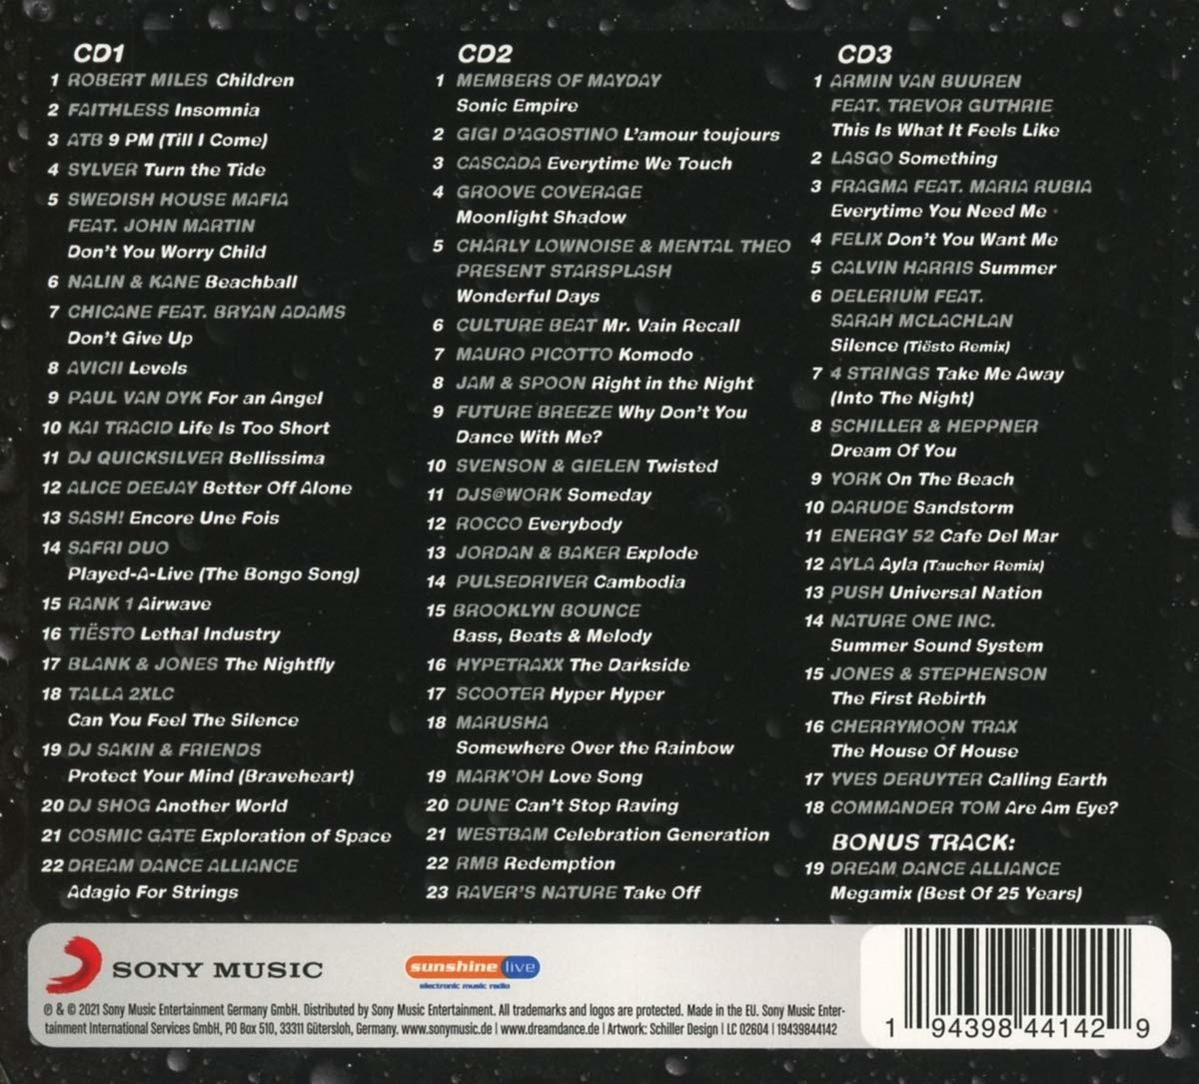 Of Dream - VARIOUS Years (CD) - Dance-Best 25